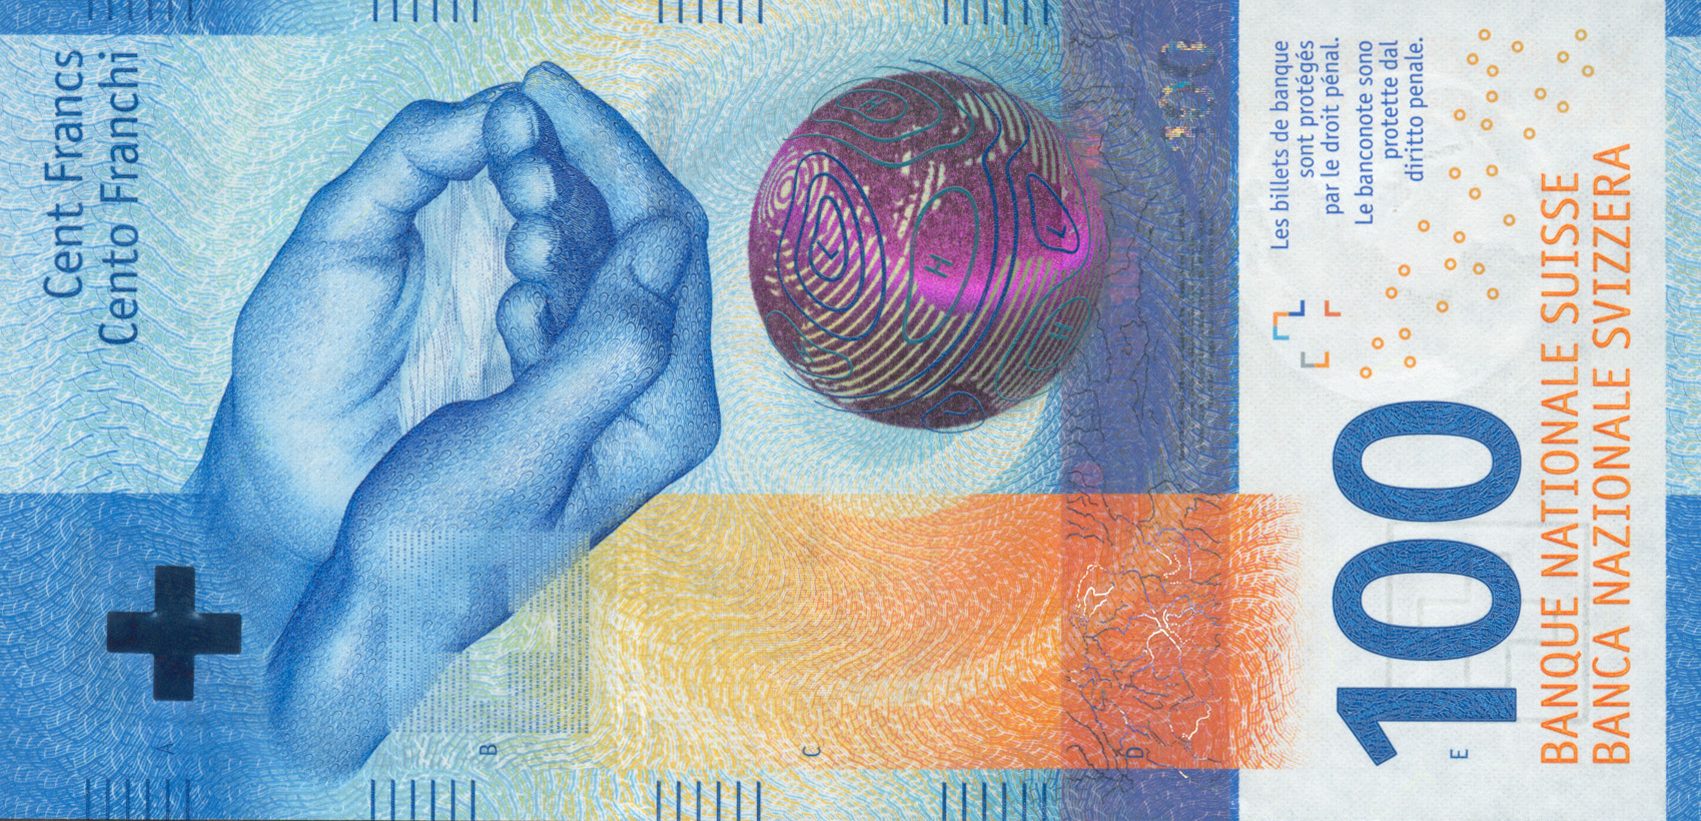 switzerland-new-100-franc-note-b358a-confirmed-banknotenews